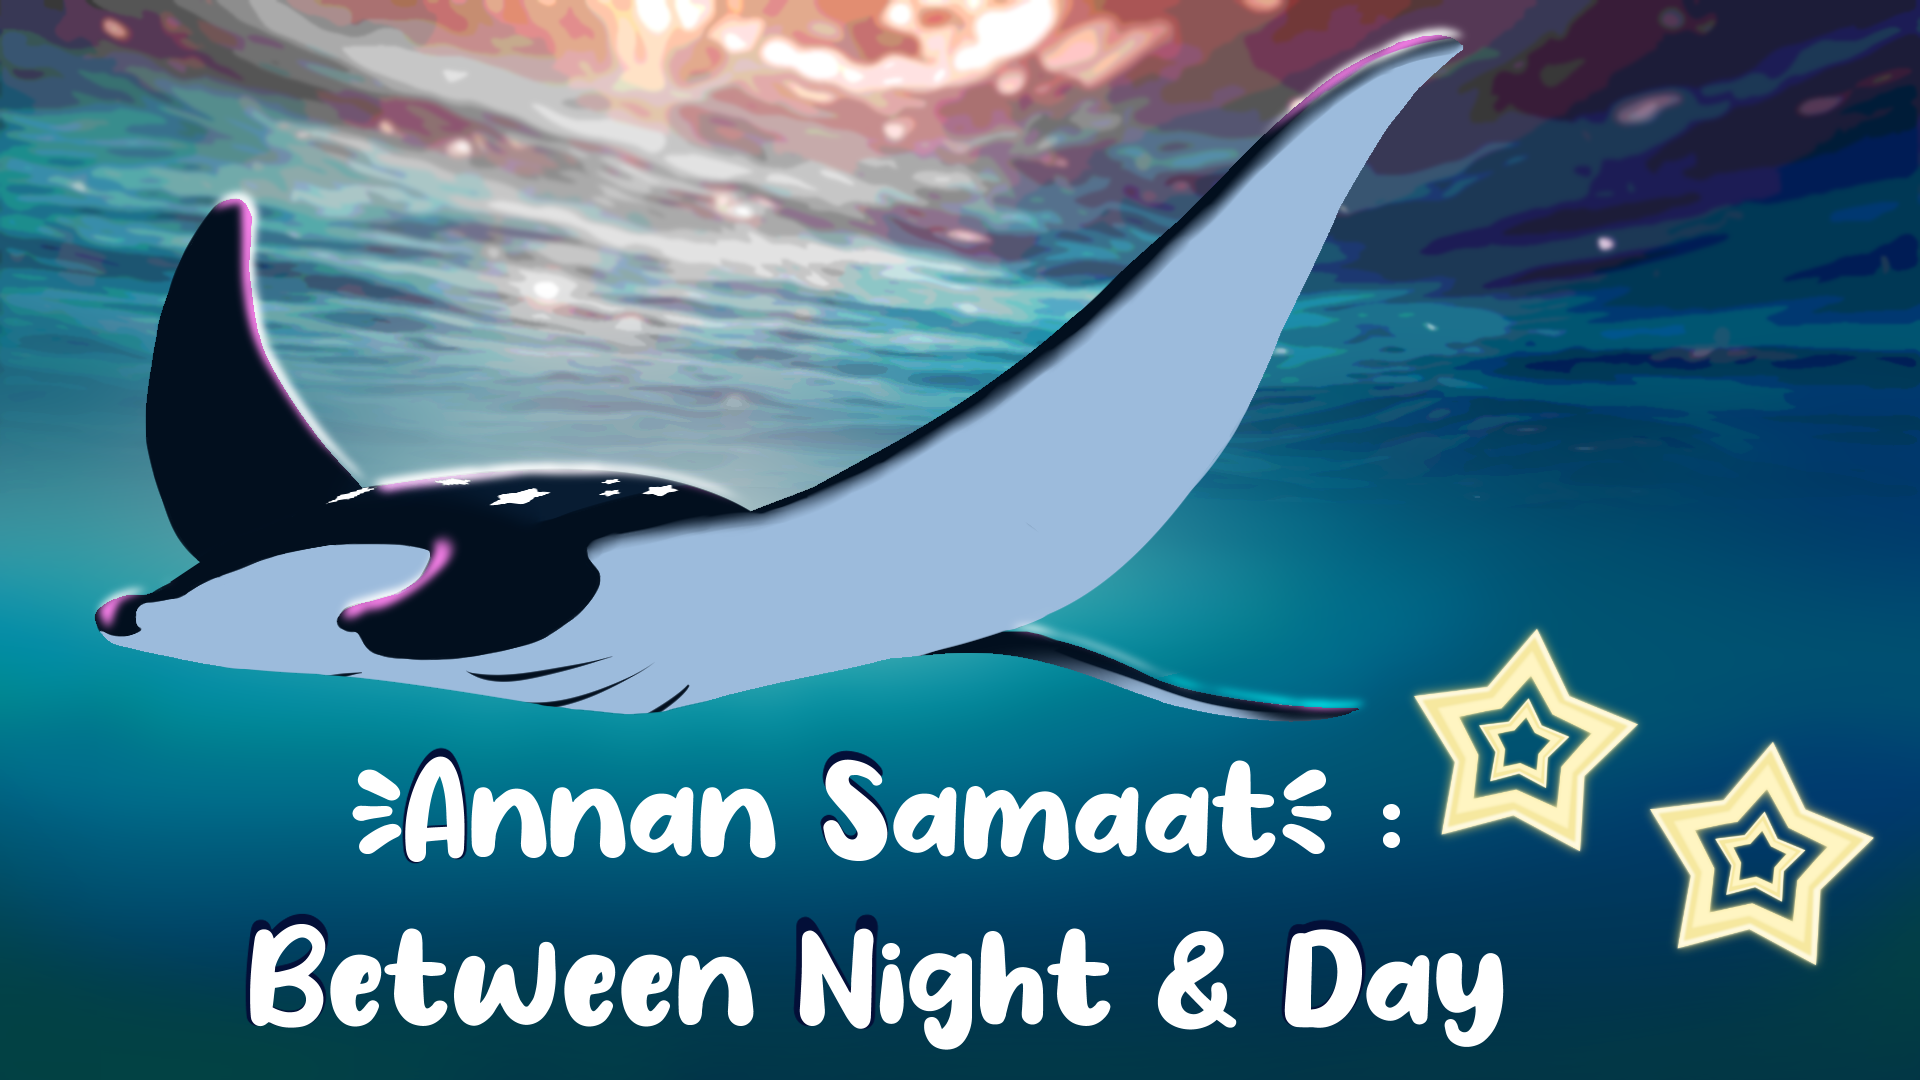 Annan Samaat: Between Night & Day